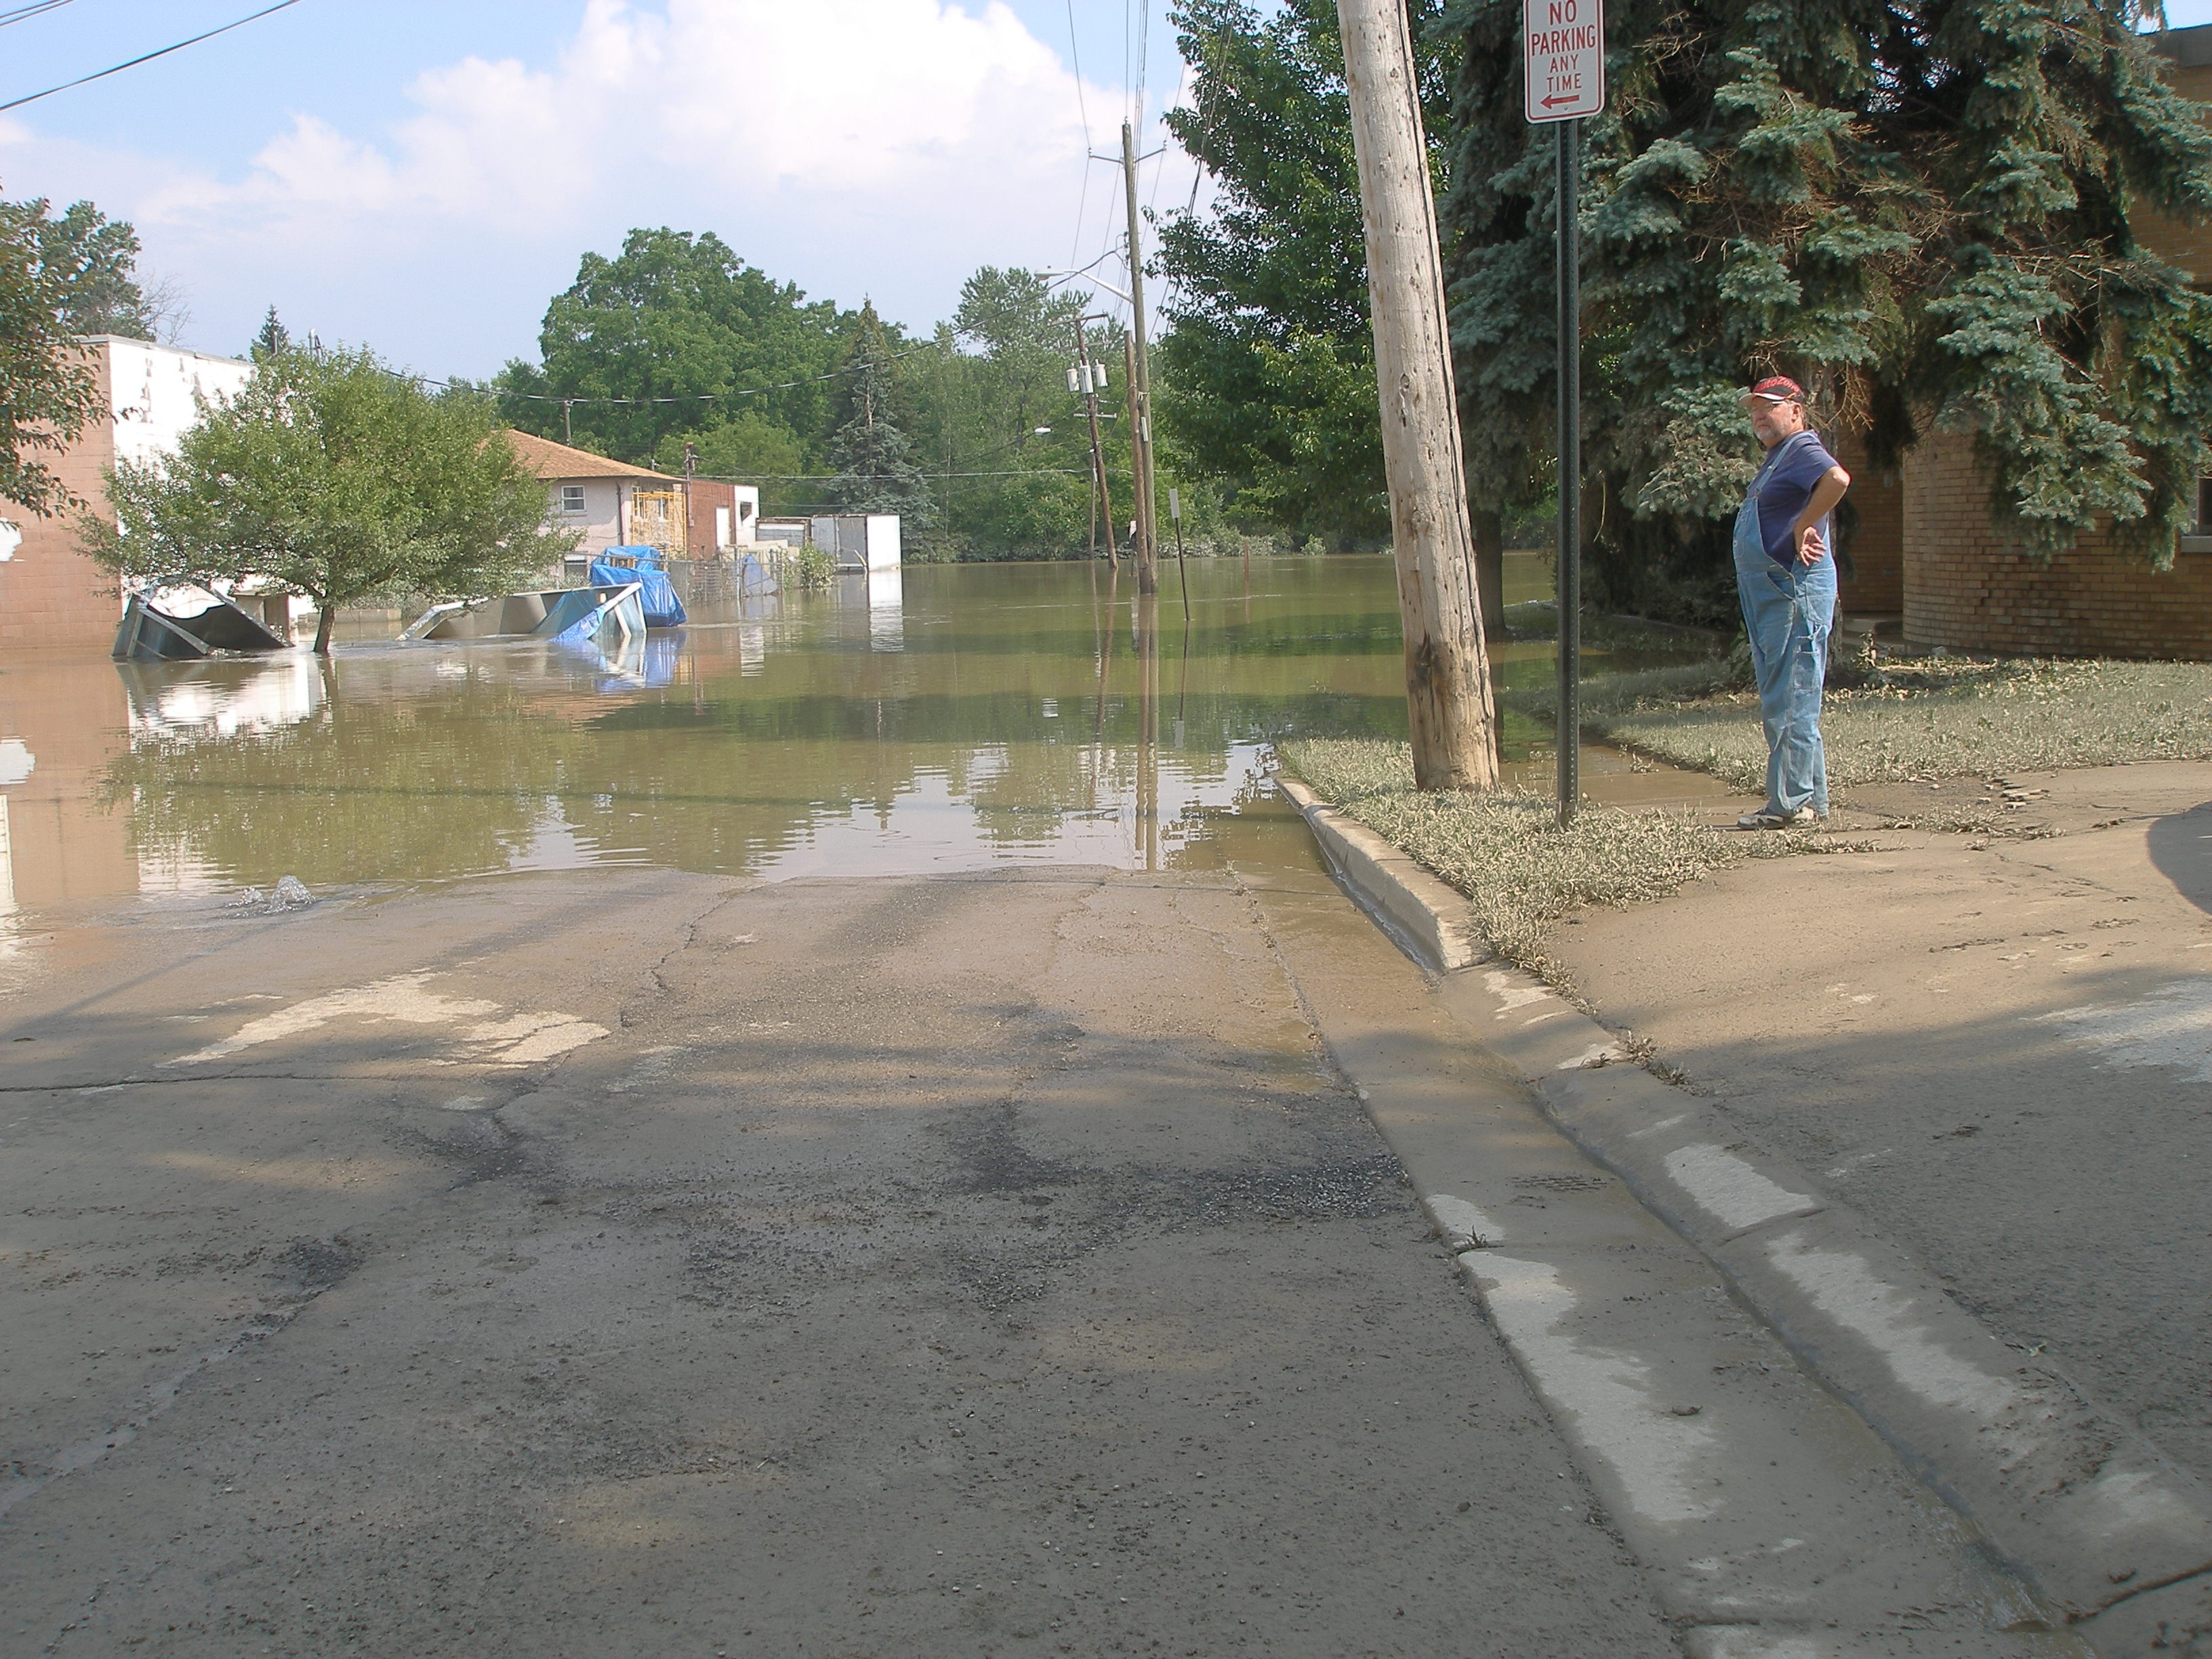 06-30-06  Reponse - Flooding